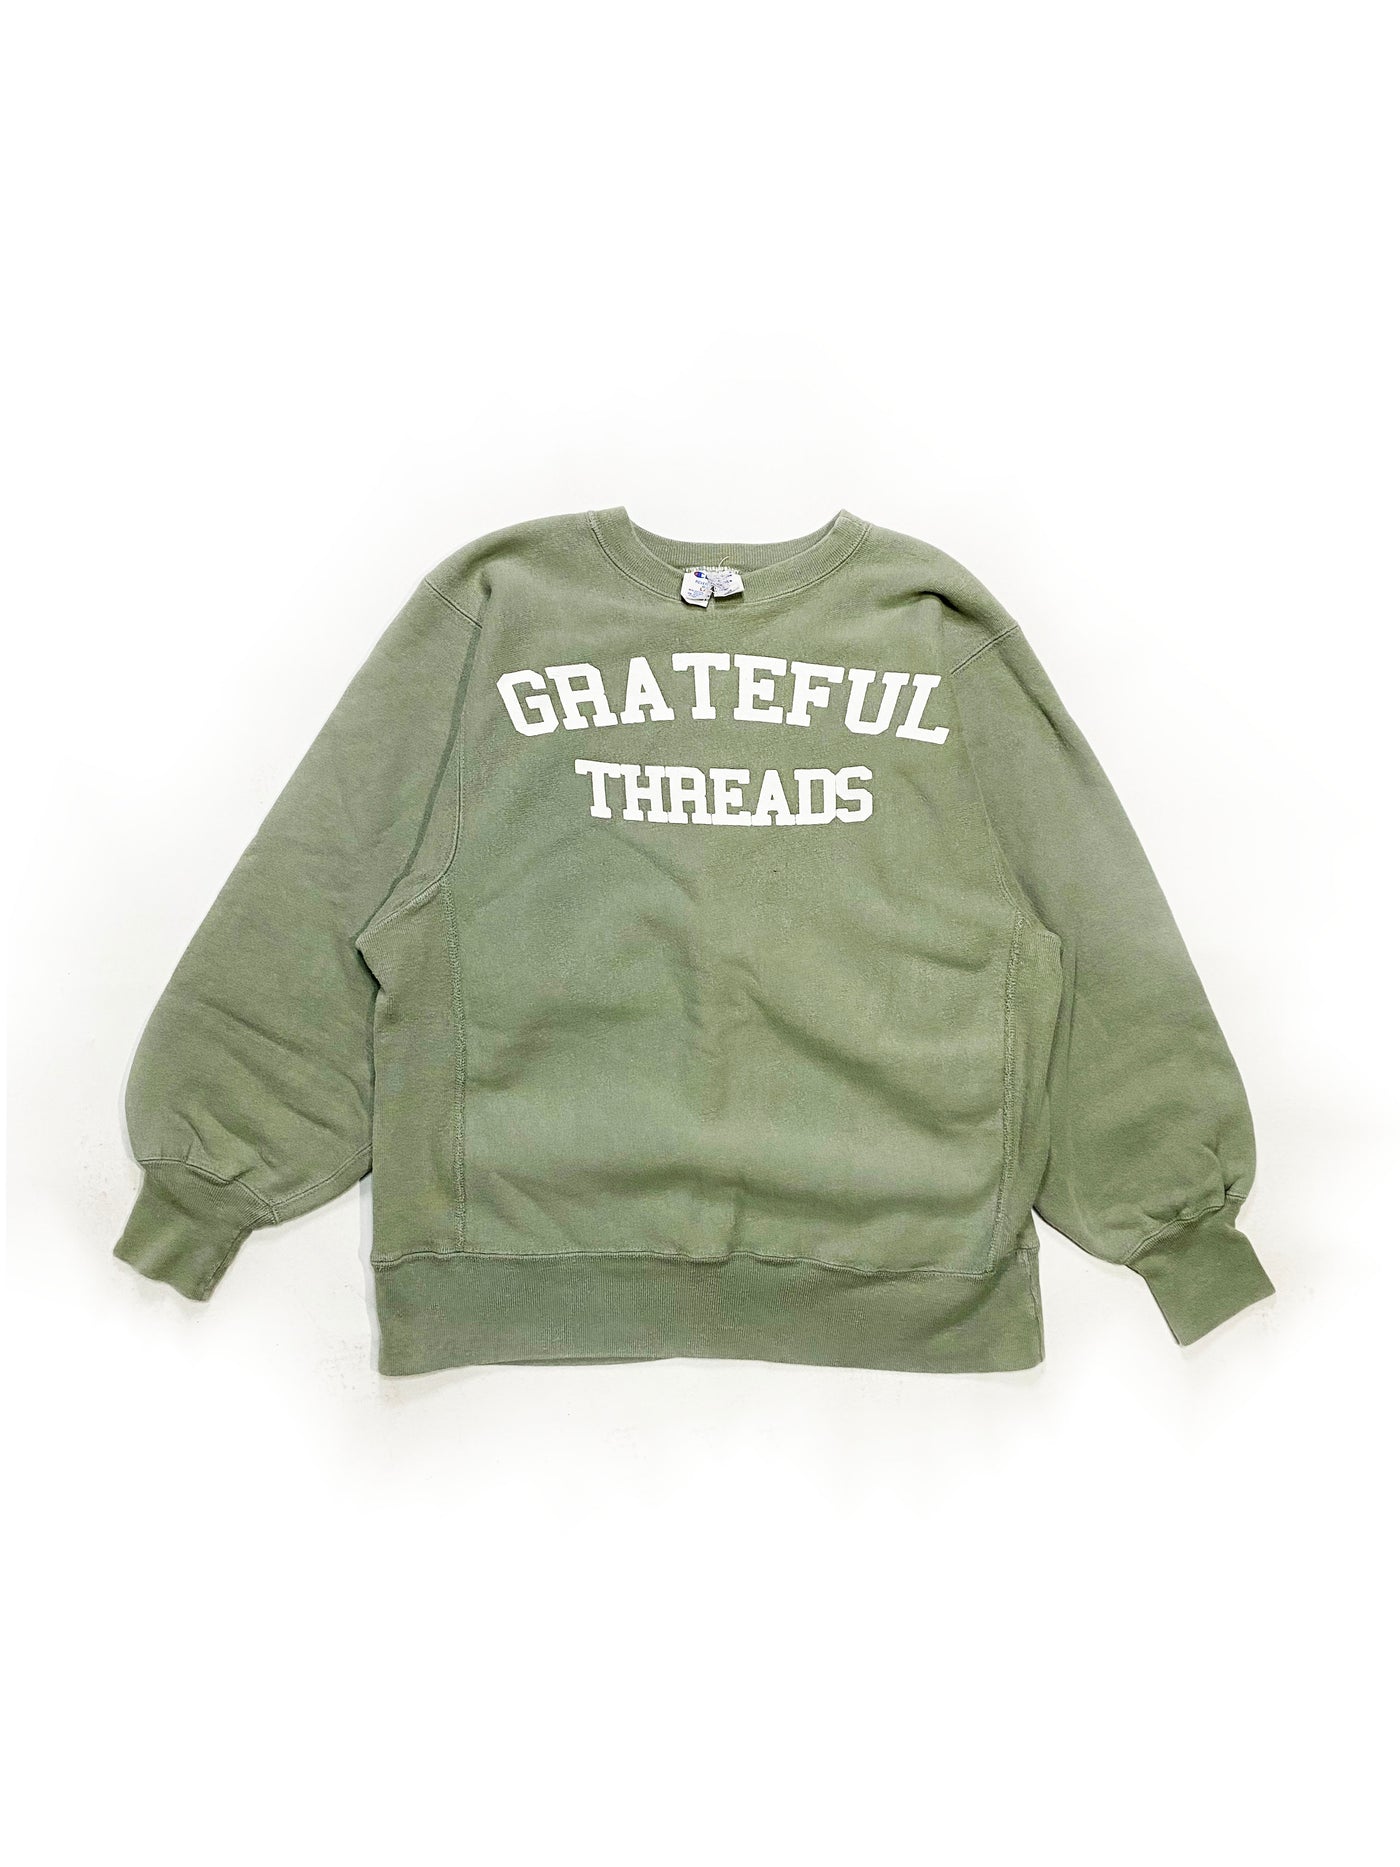 90s Champion Grateful Threads Spellout Crewneck - Sage Green - Size L